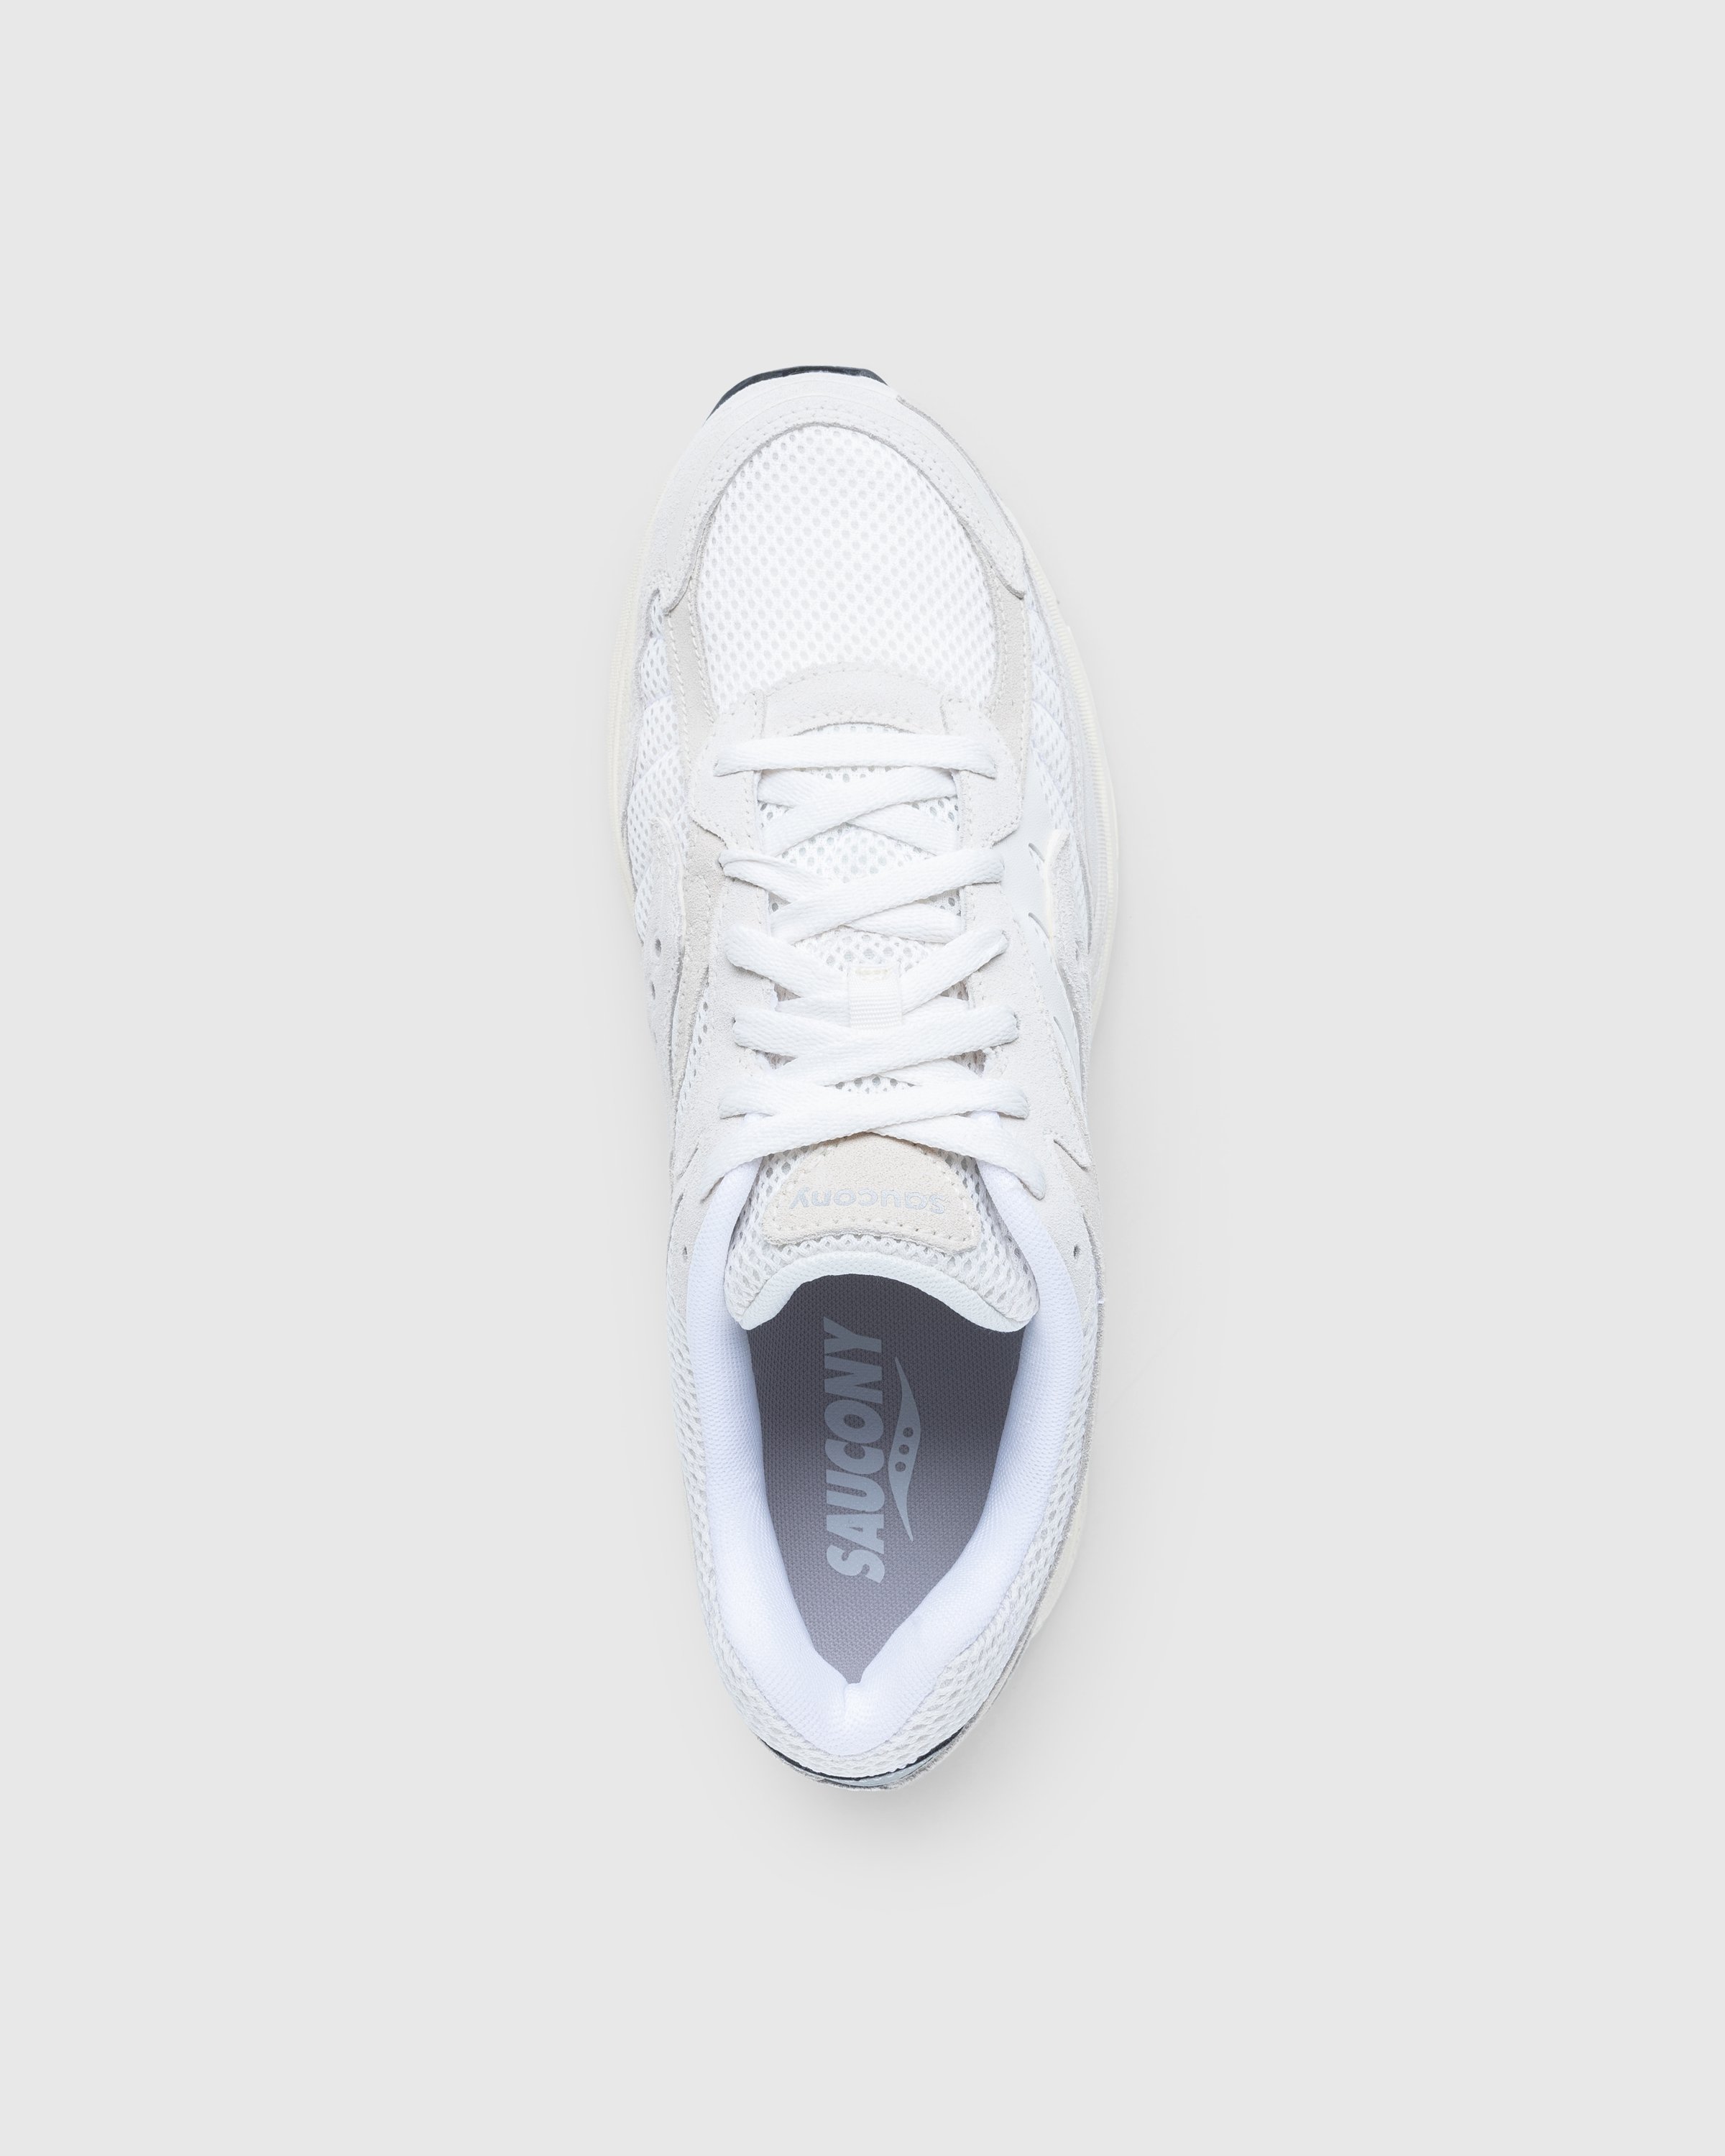 Saucony - ProGrid Omni 9 White/Off-White - Footwear - WHITE - Image 5